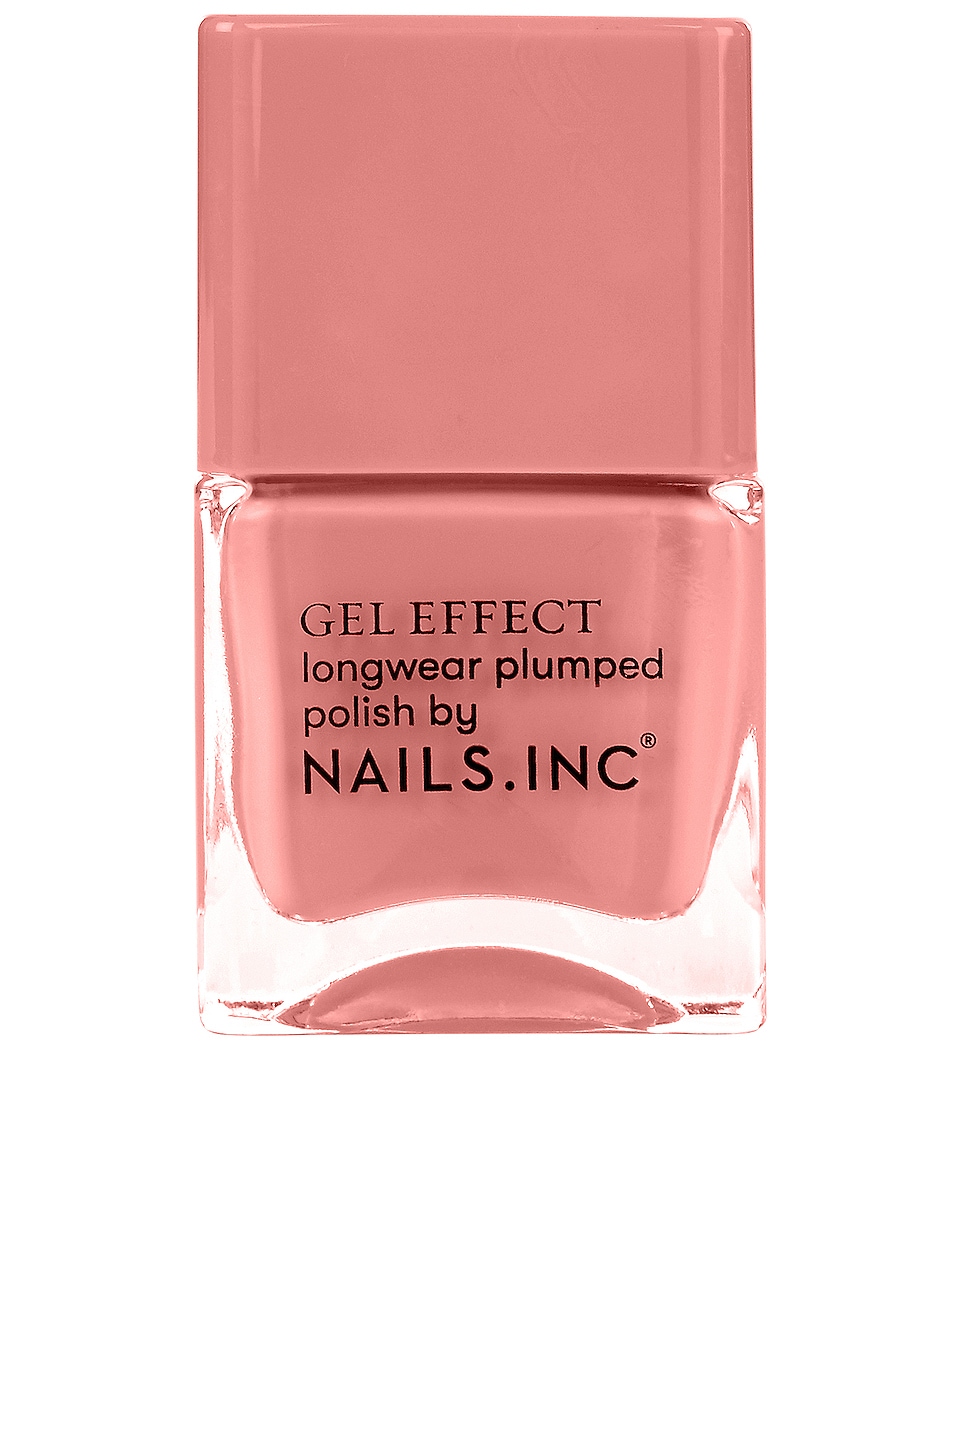 Nails inc launch Gel Effect Polish